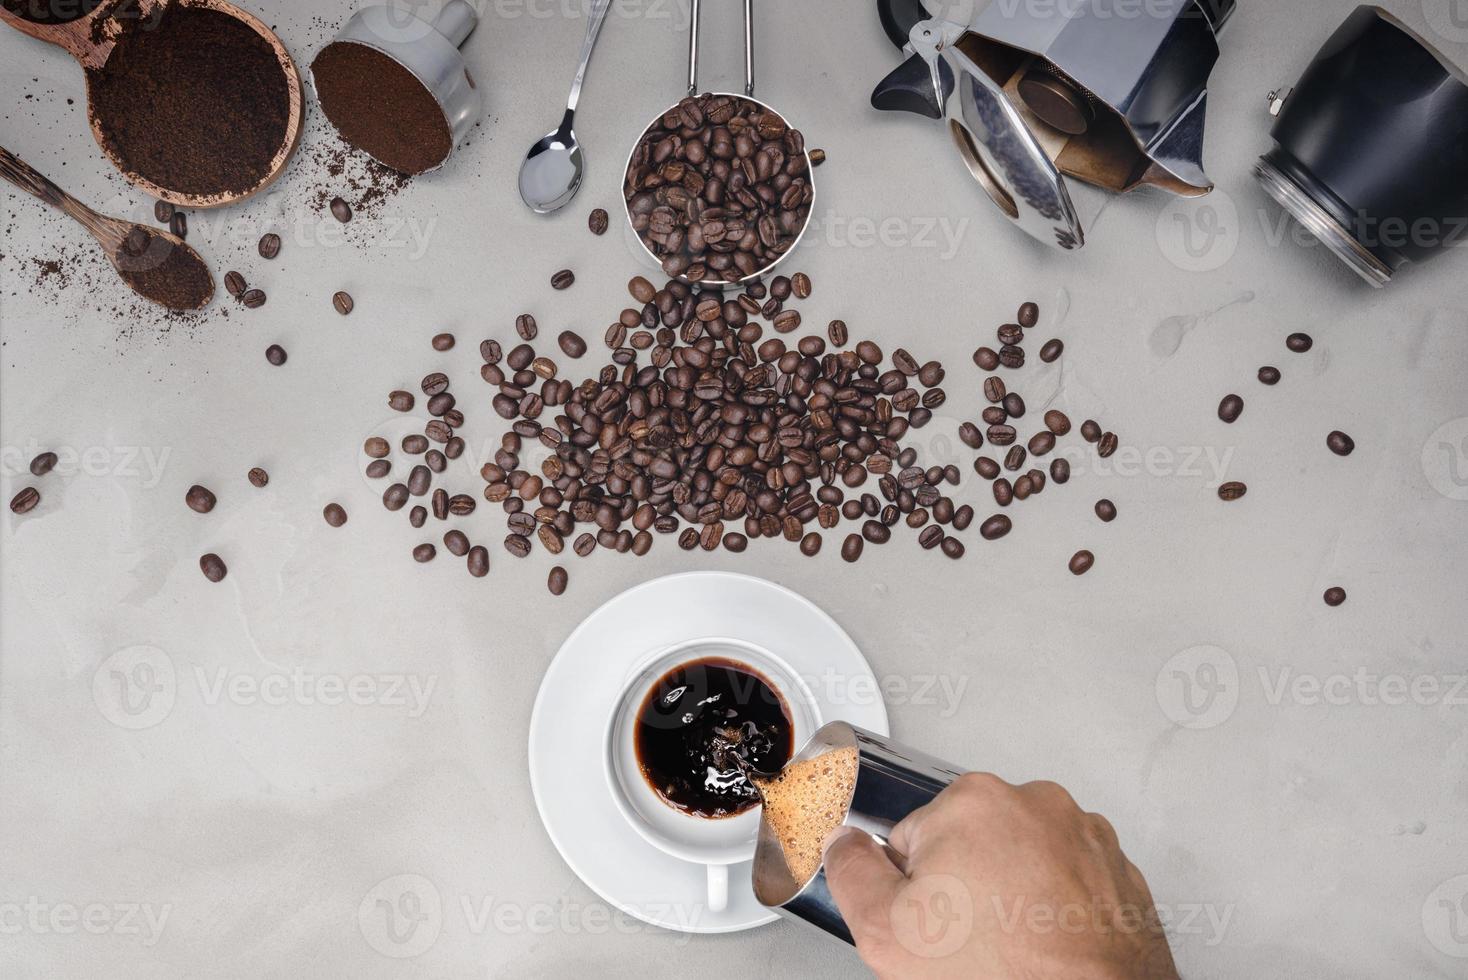 Fondo con café surtido, granos de café, taza de café negro, equipo de cafetera foto